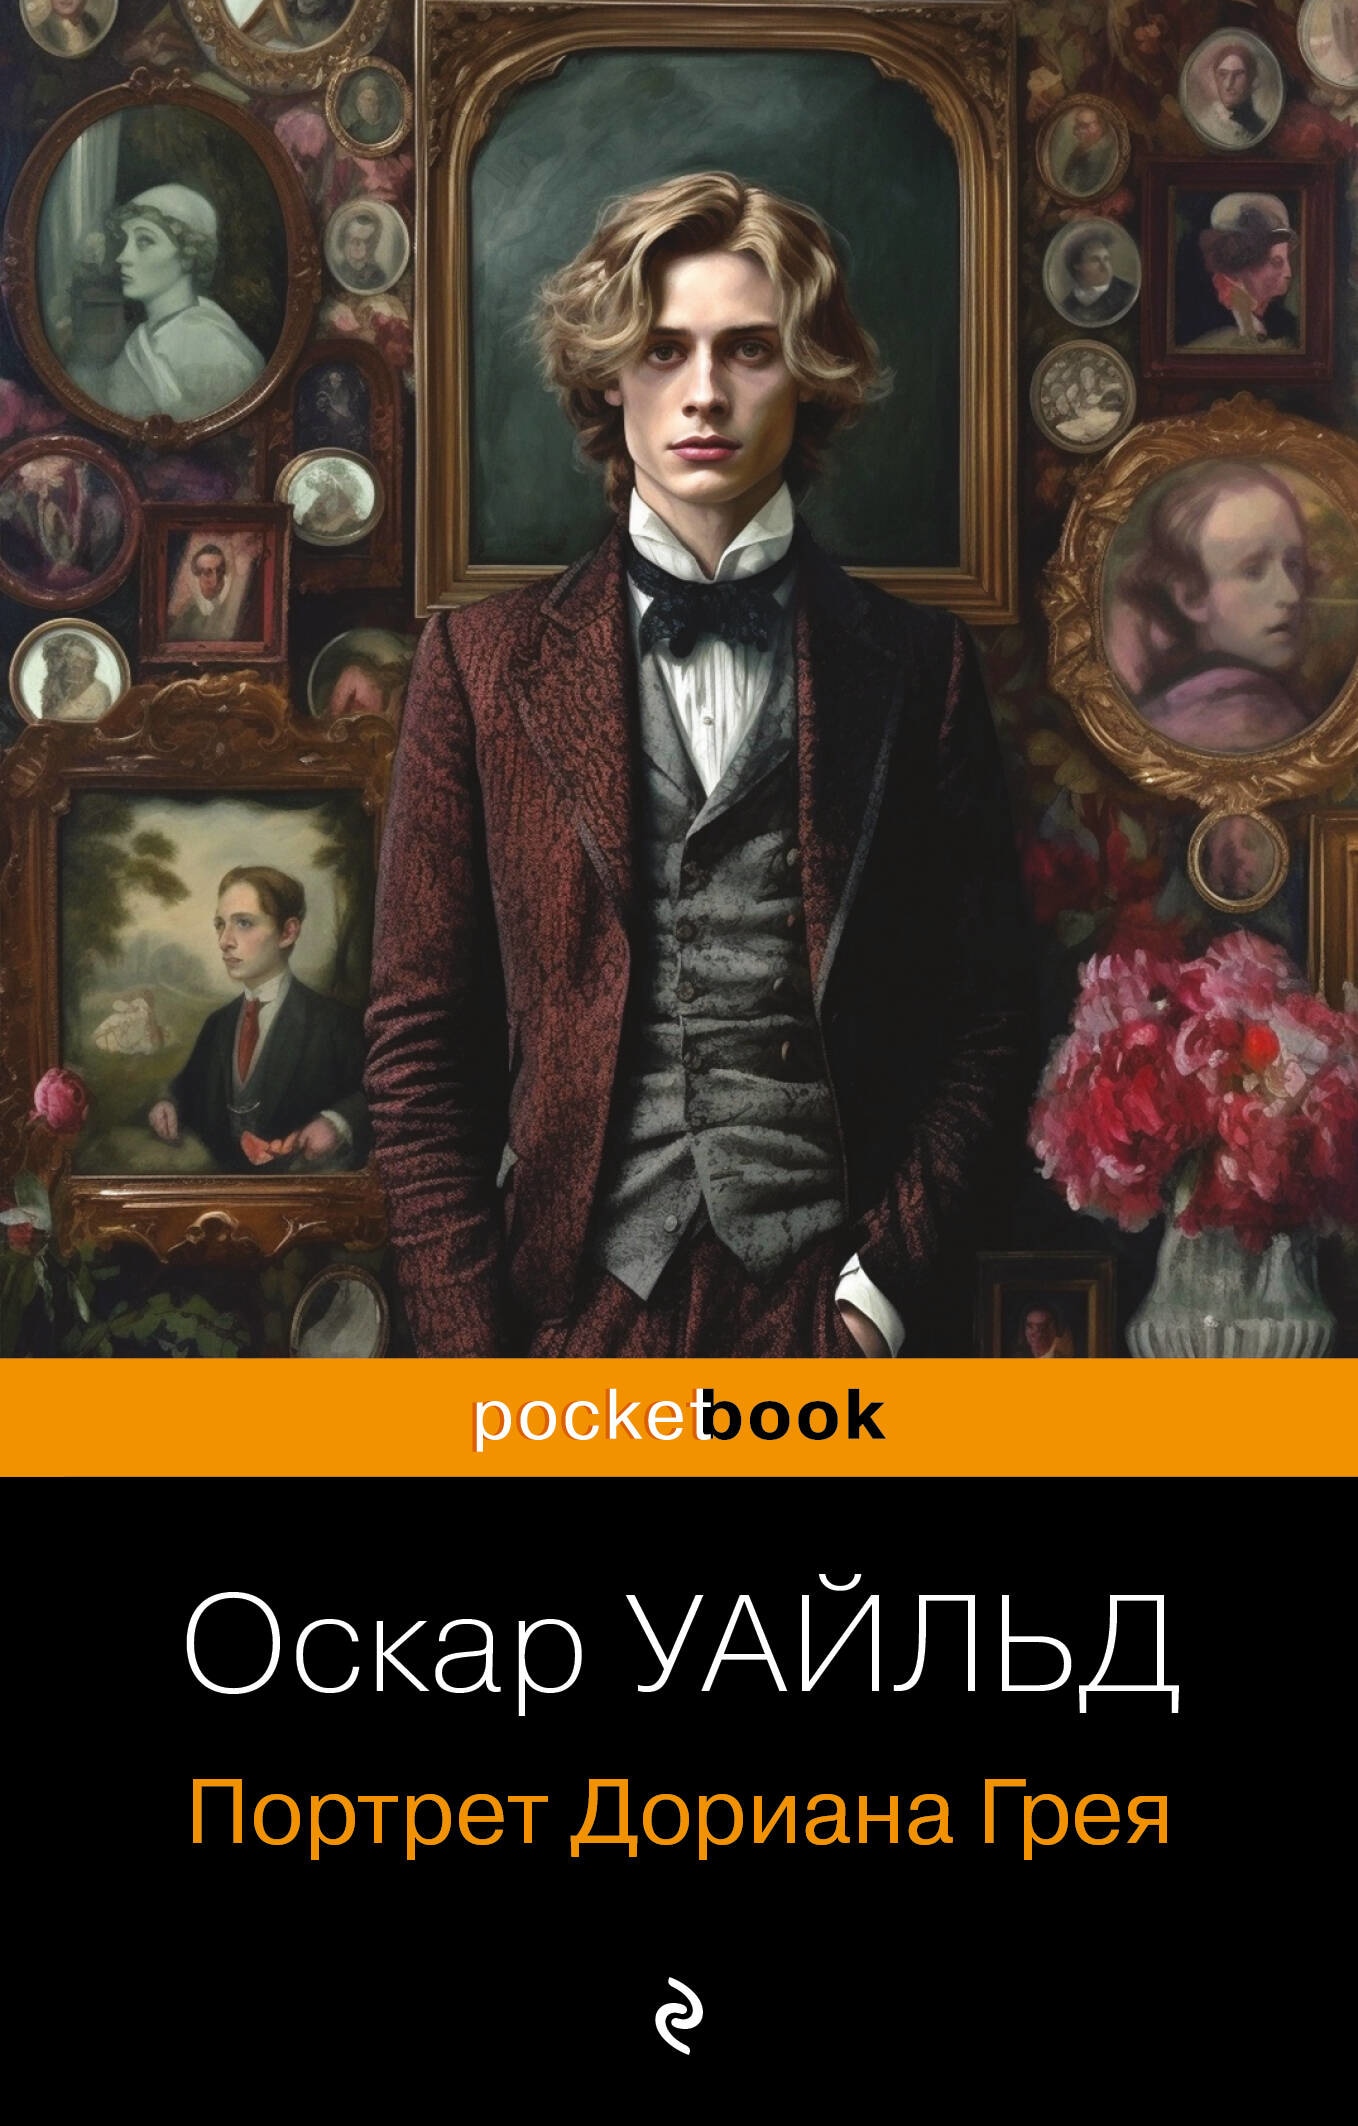 Book “Портрет Дориана Грея” by Оскар Уайльд — 2023